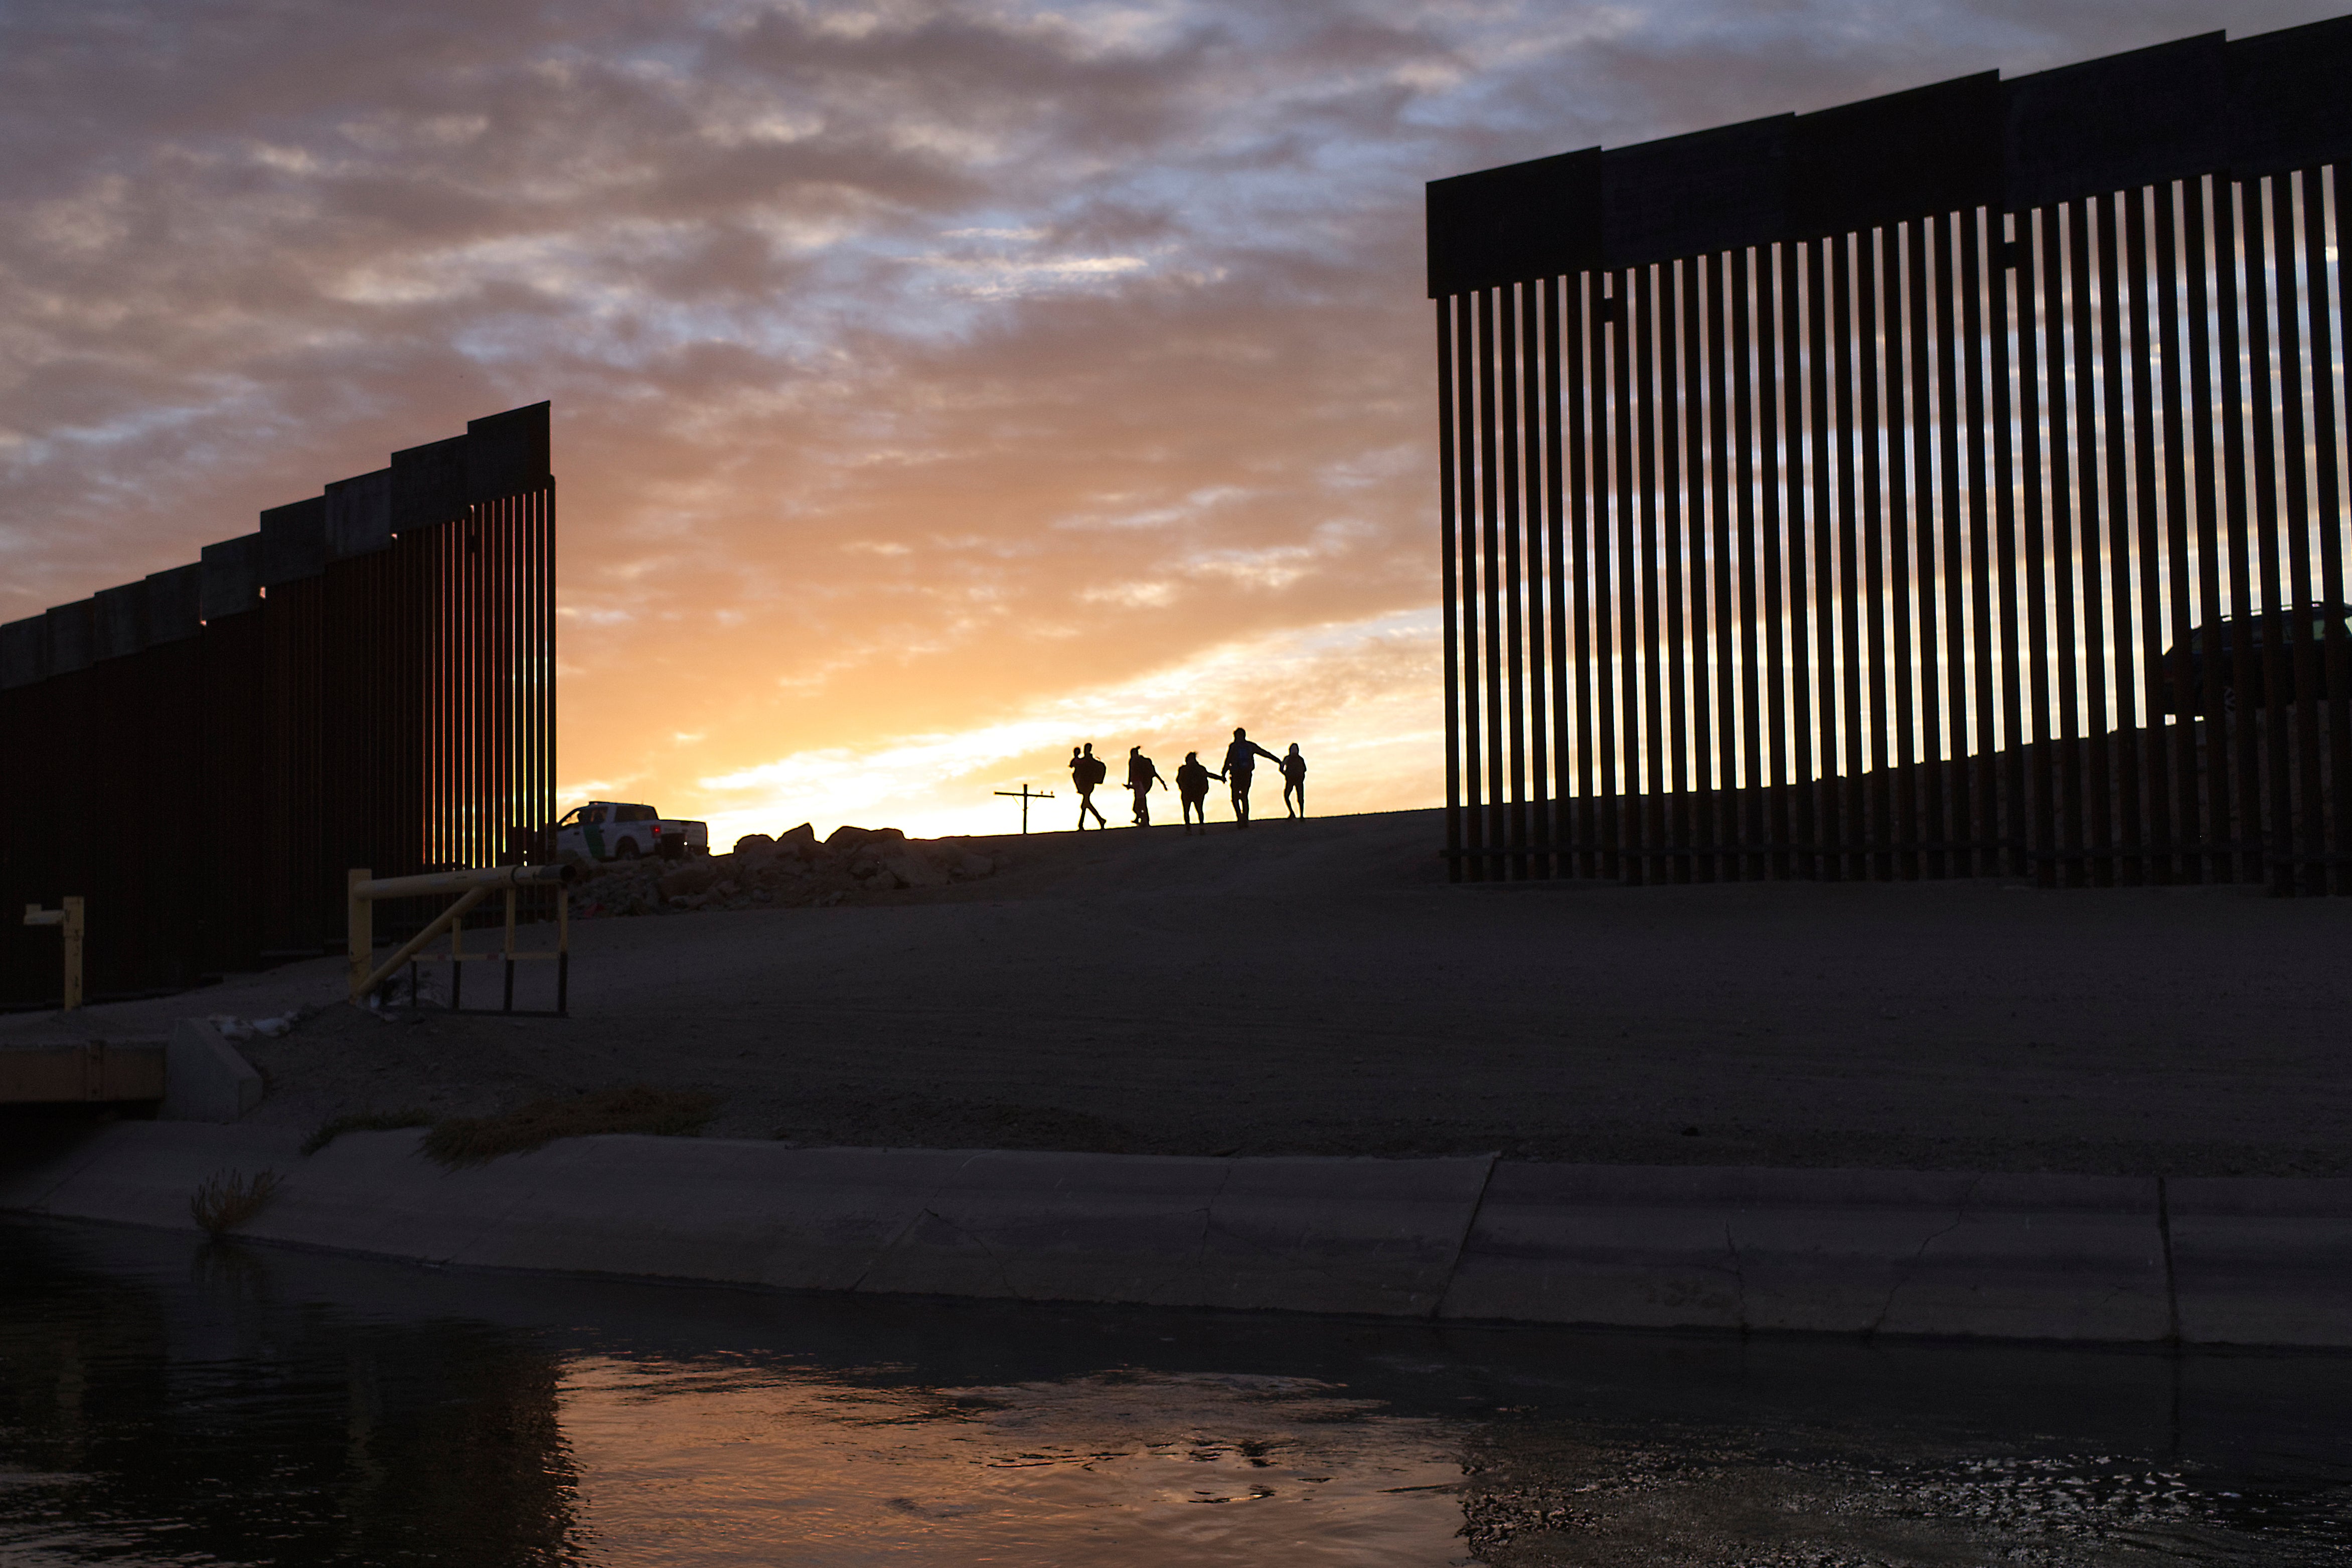 Migrants pass through a gap in the border wall near Yuma in Arizona (file)